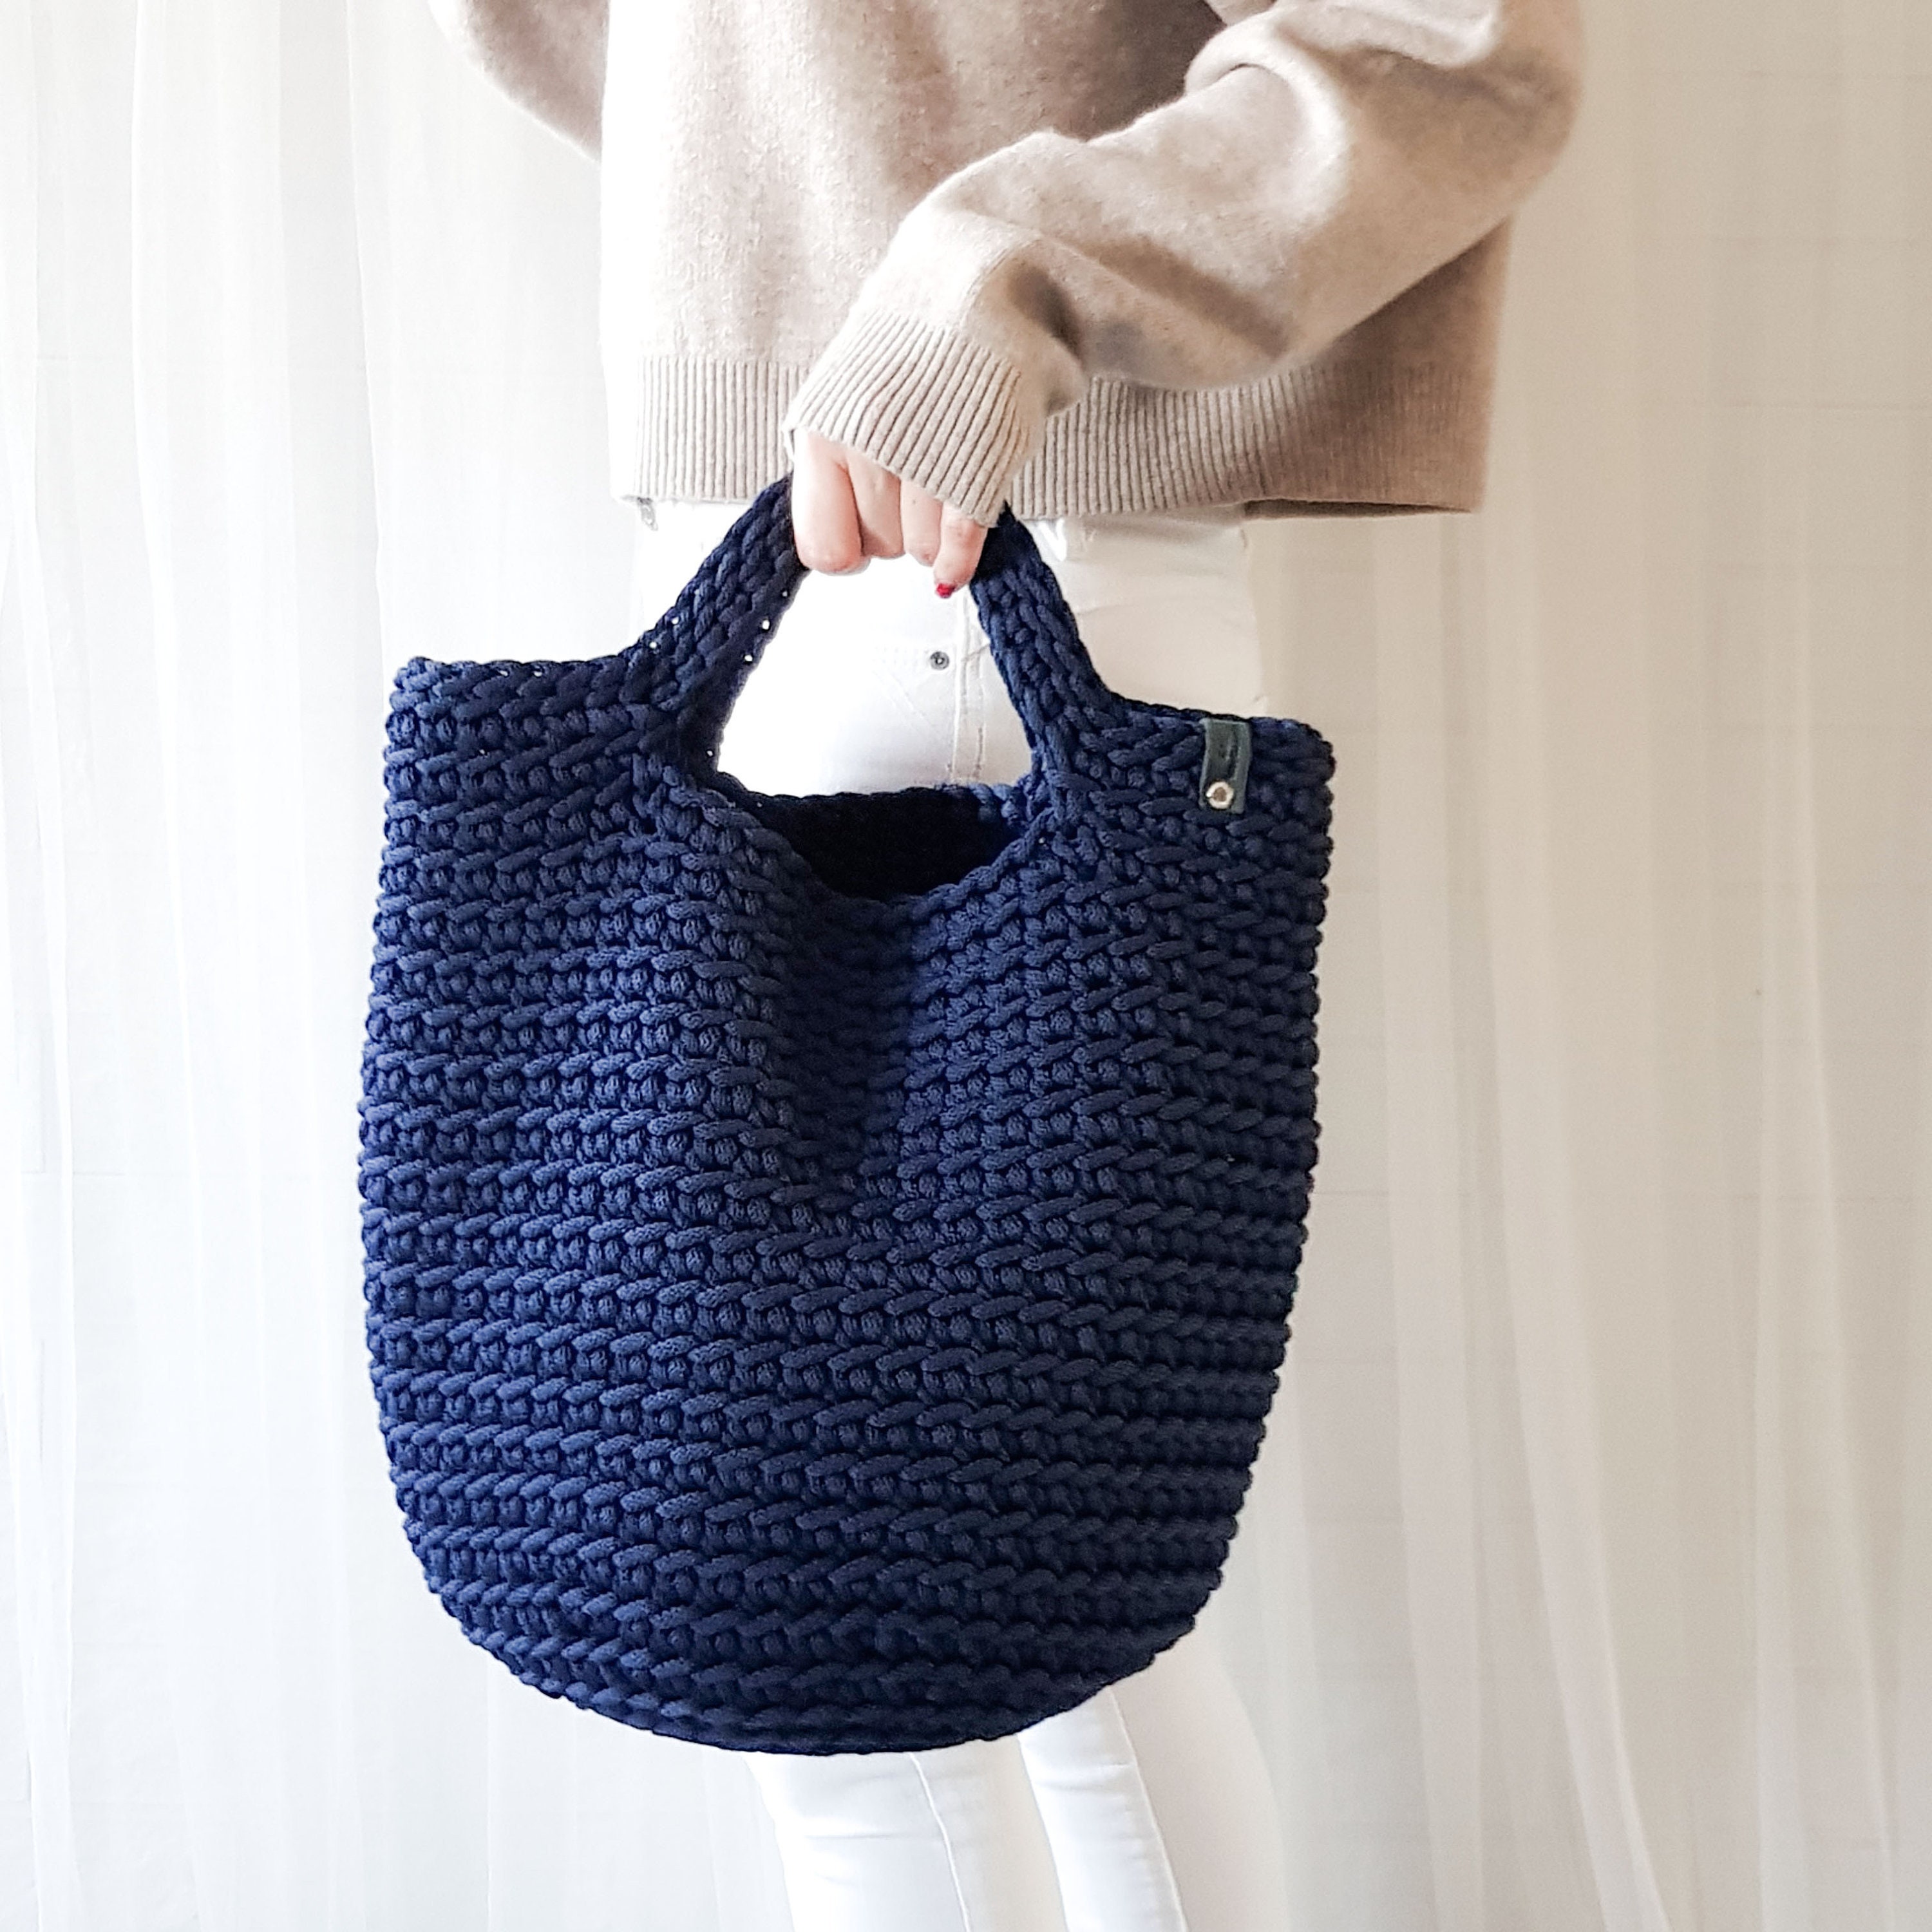 Crochet hand bag/ Everyday tote bag/ Womens bag/ Navy blue | Etsy